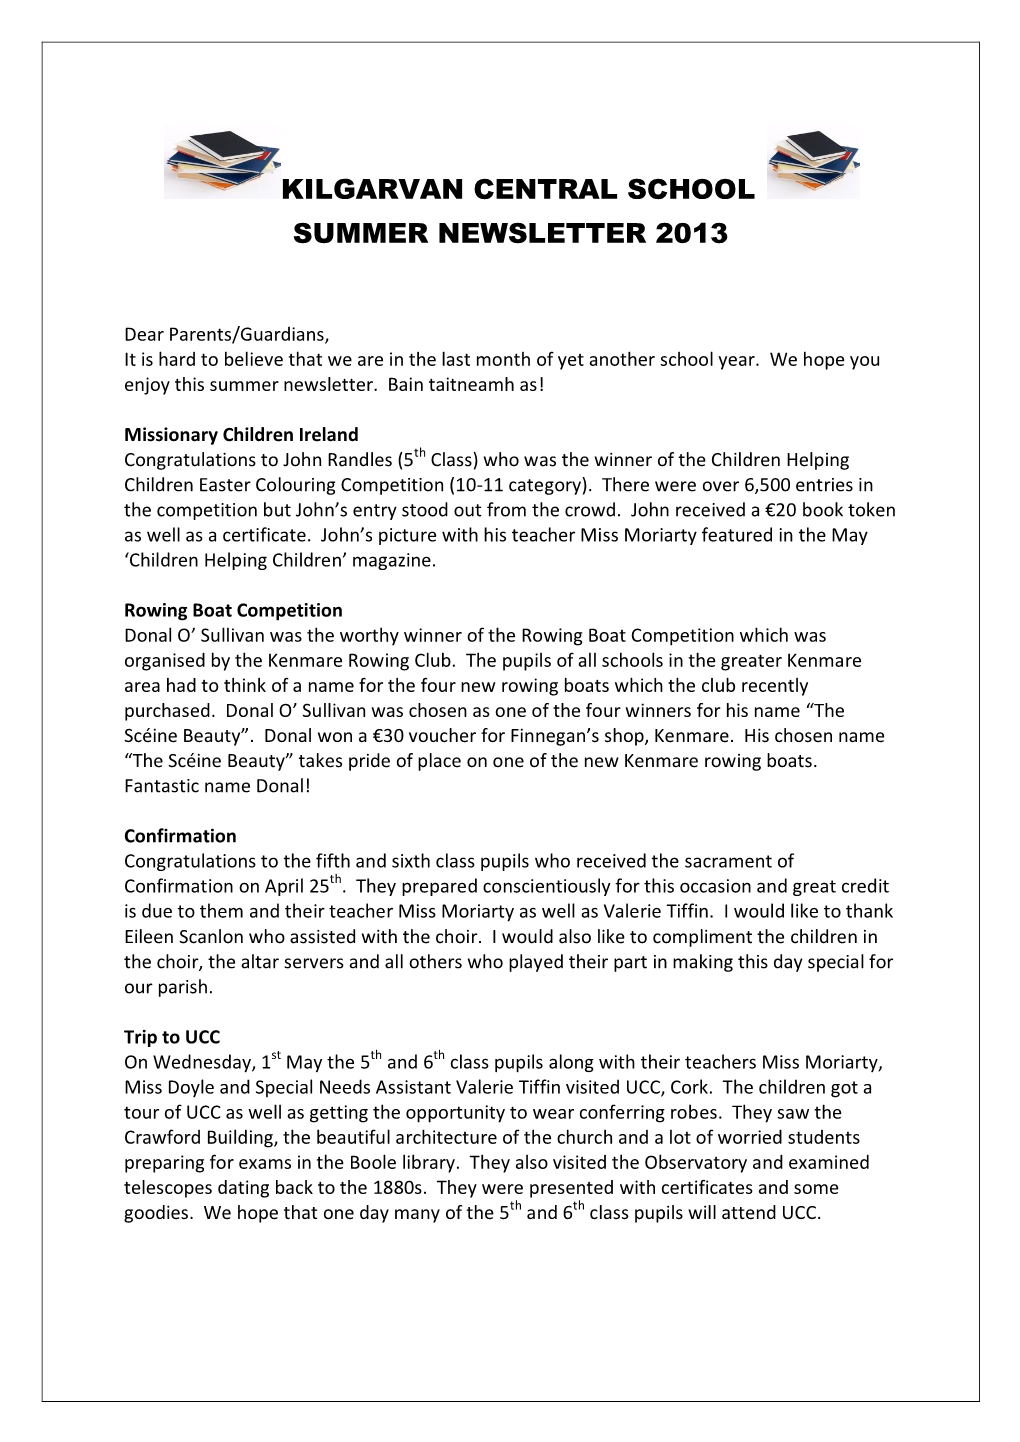 Kilgarvan Central School Summer Newsletter 2013